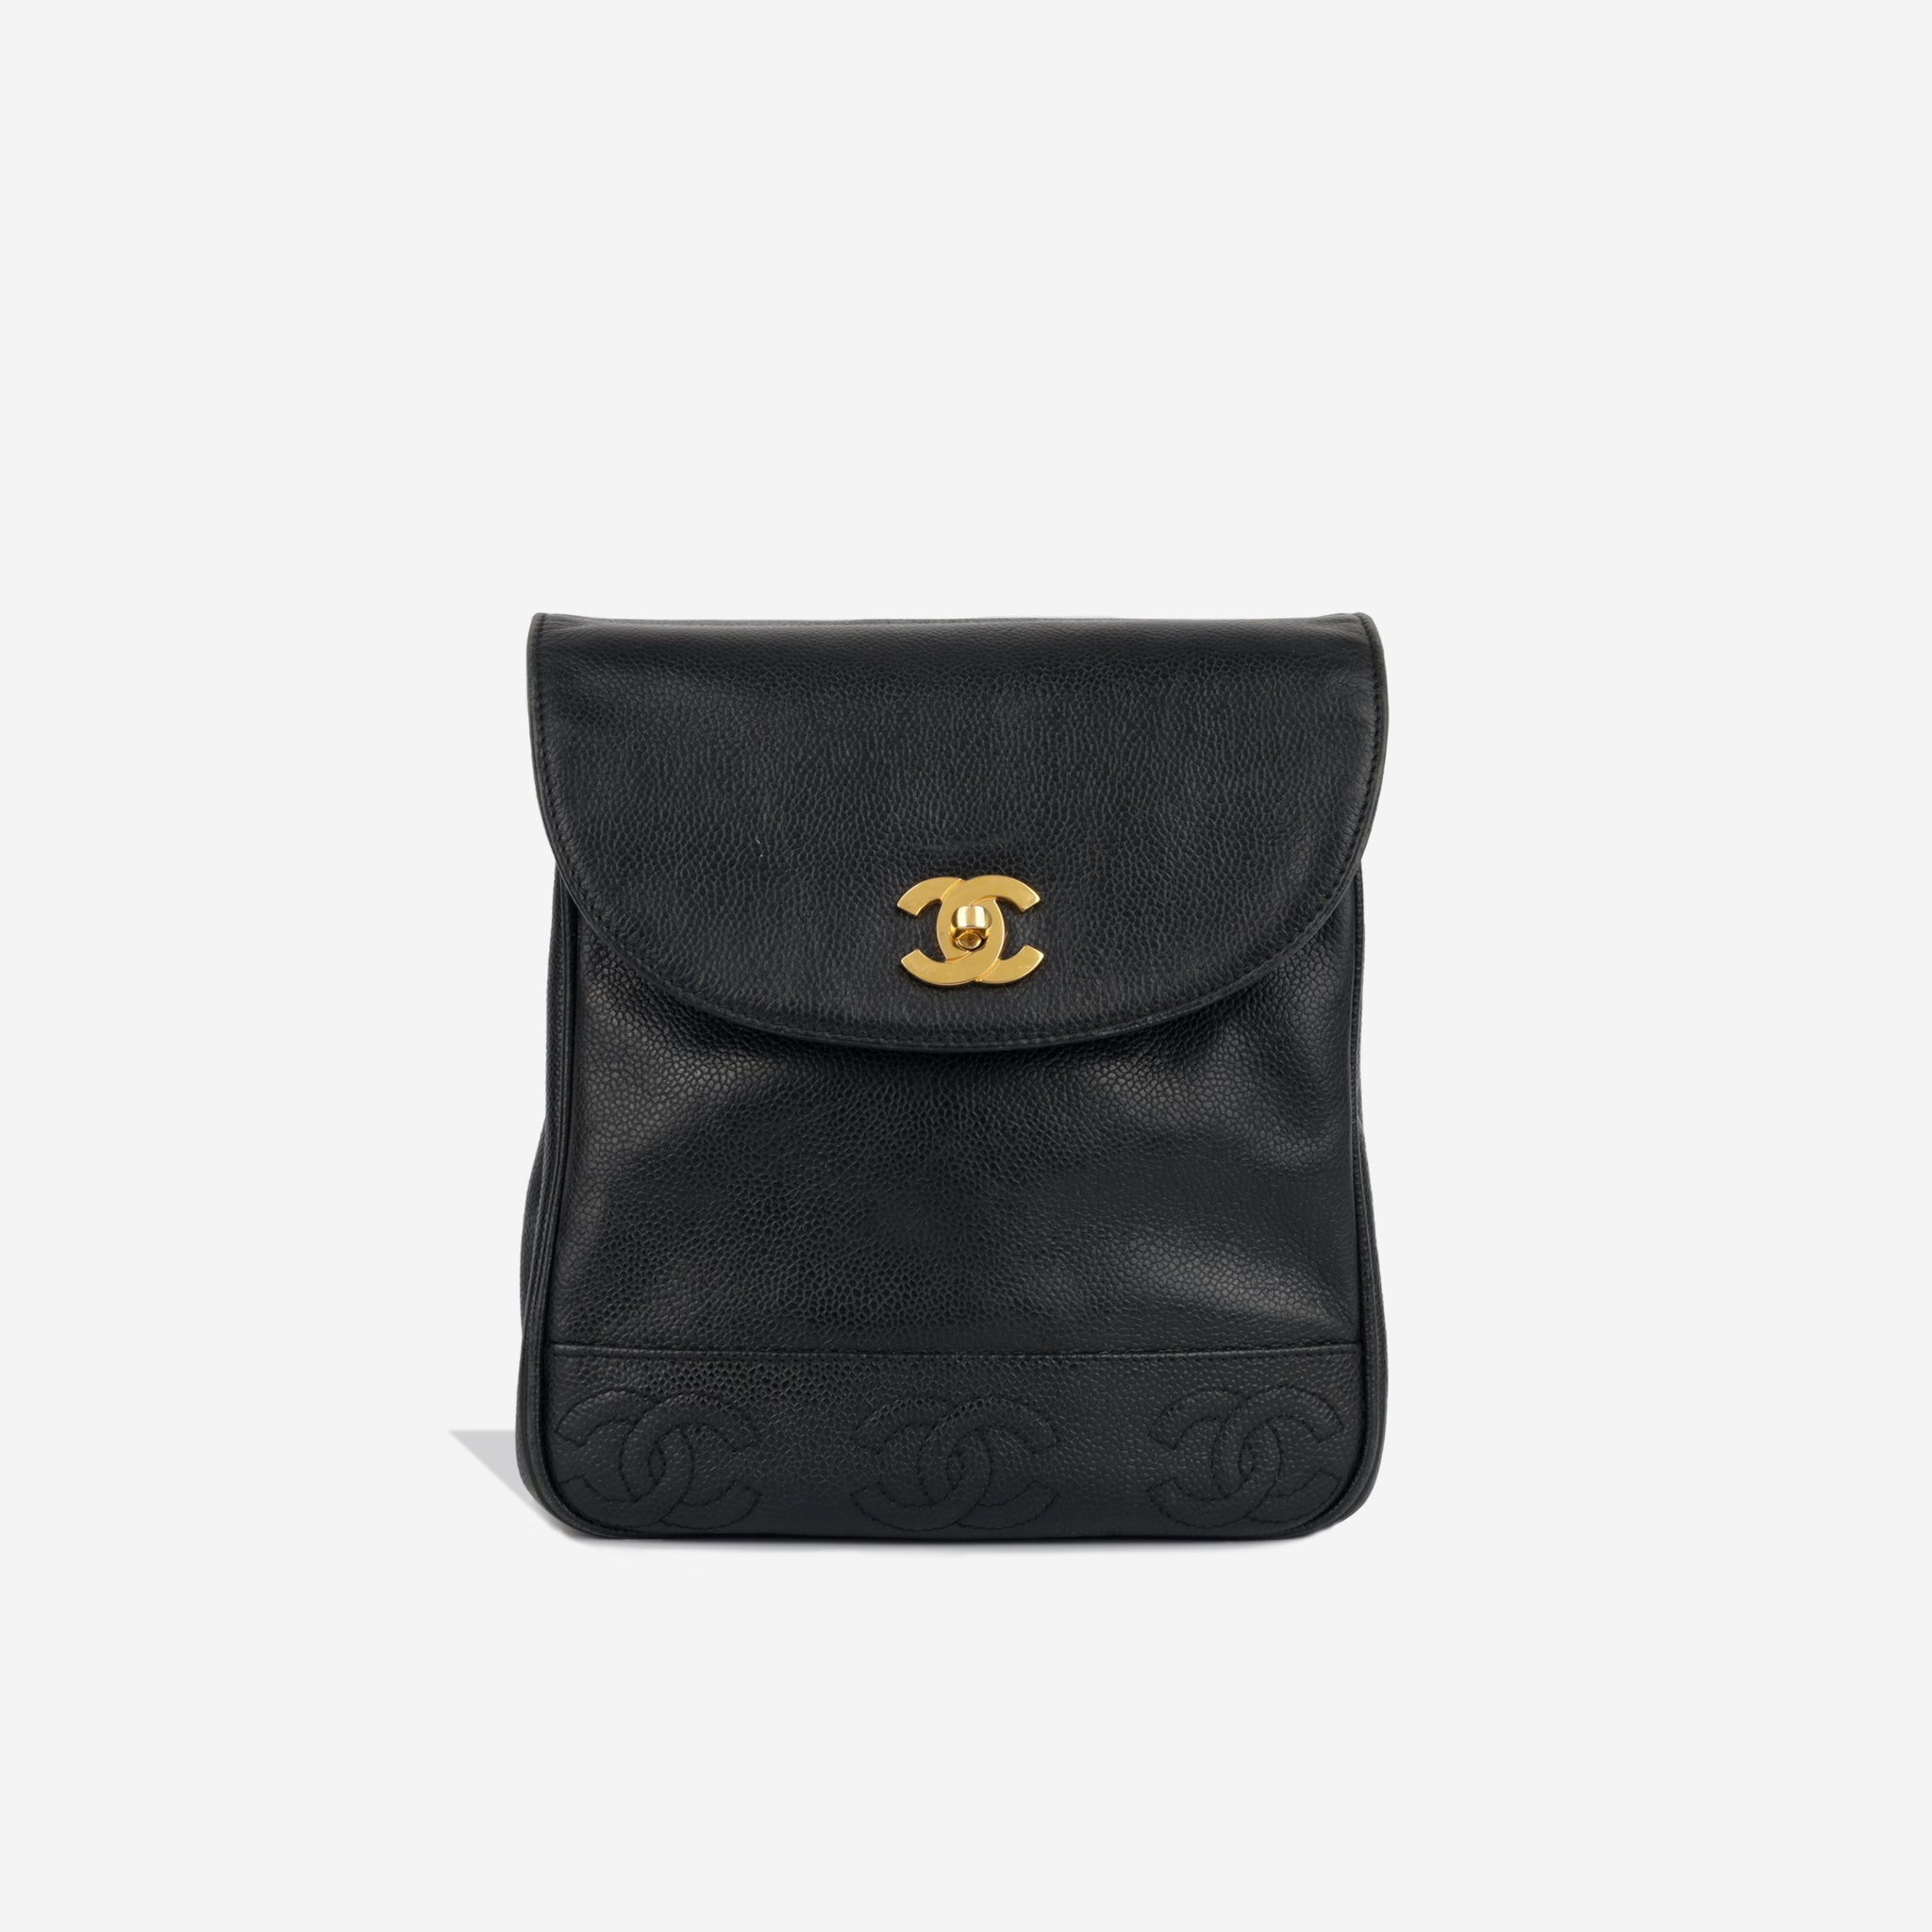 Chanel - Vintage Triple CC Backpack - Black Caviar GHW - 1996/97